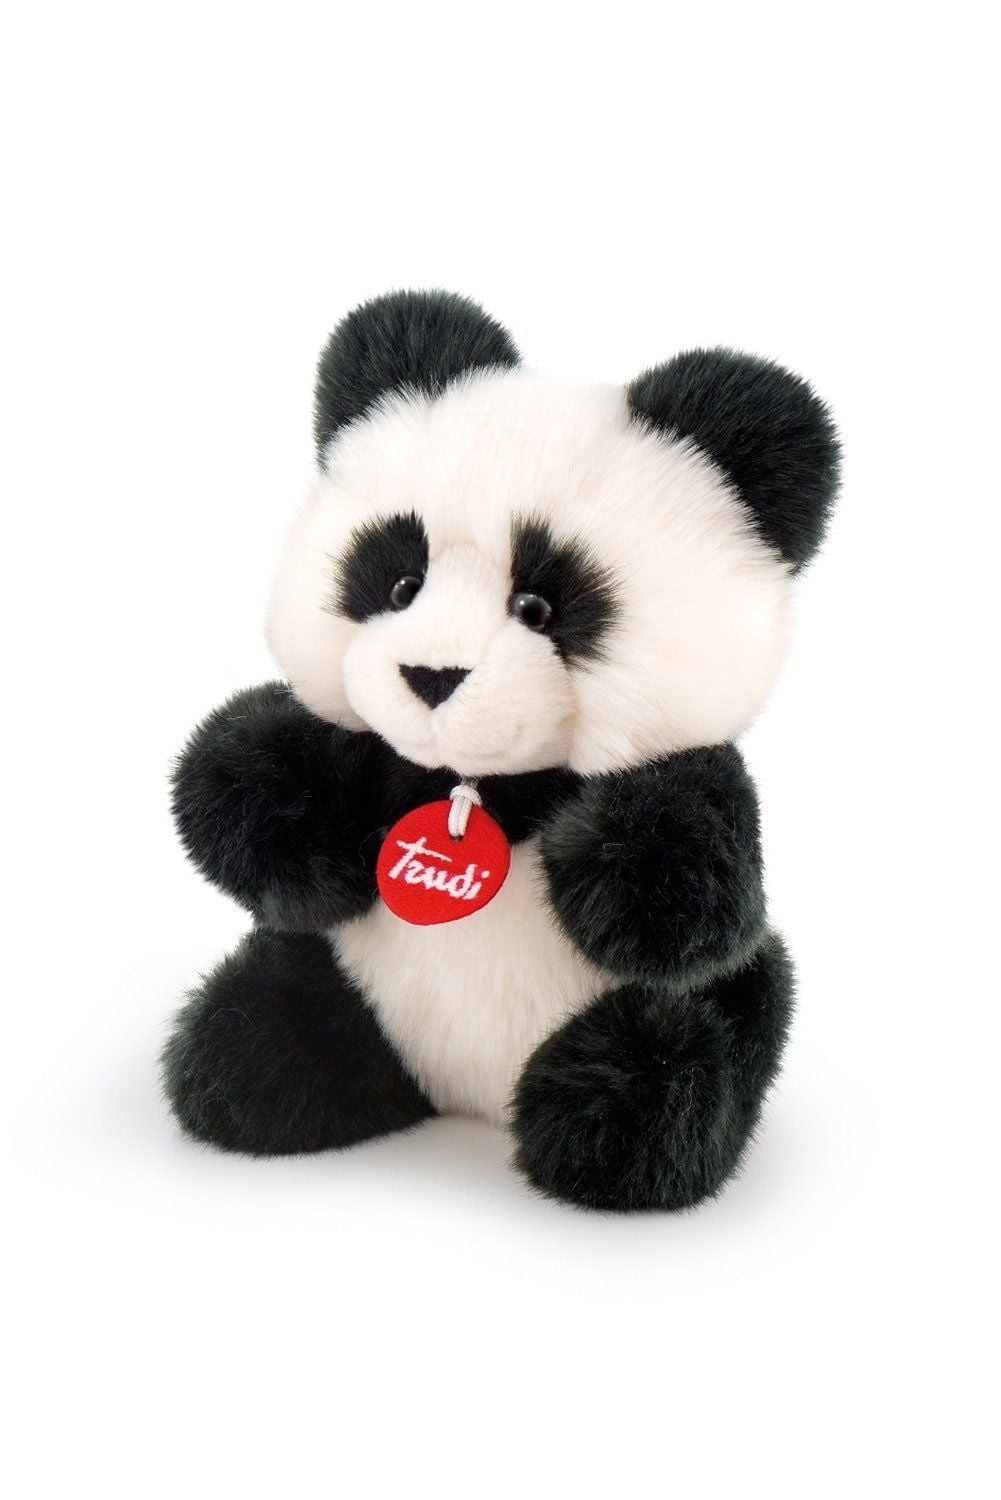 panda stuffed animal walmart